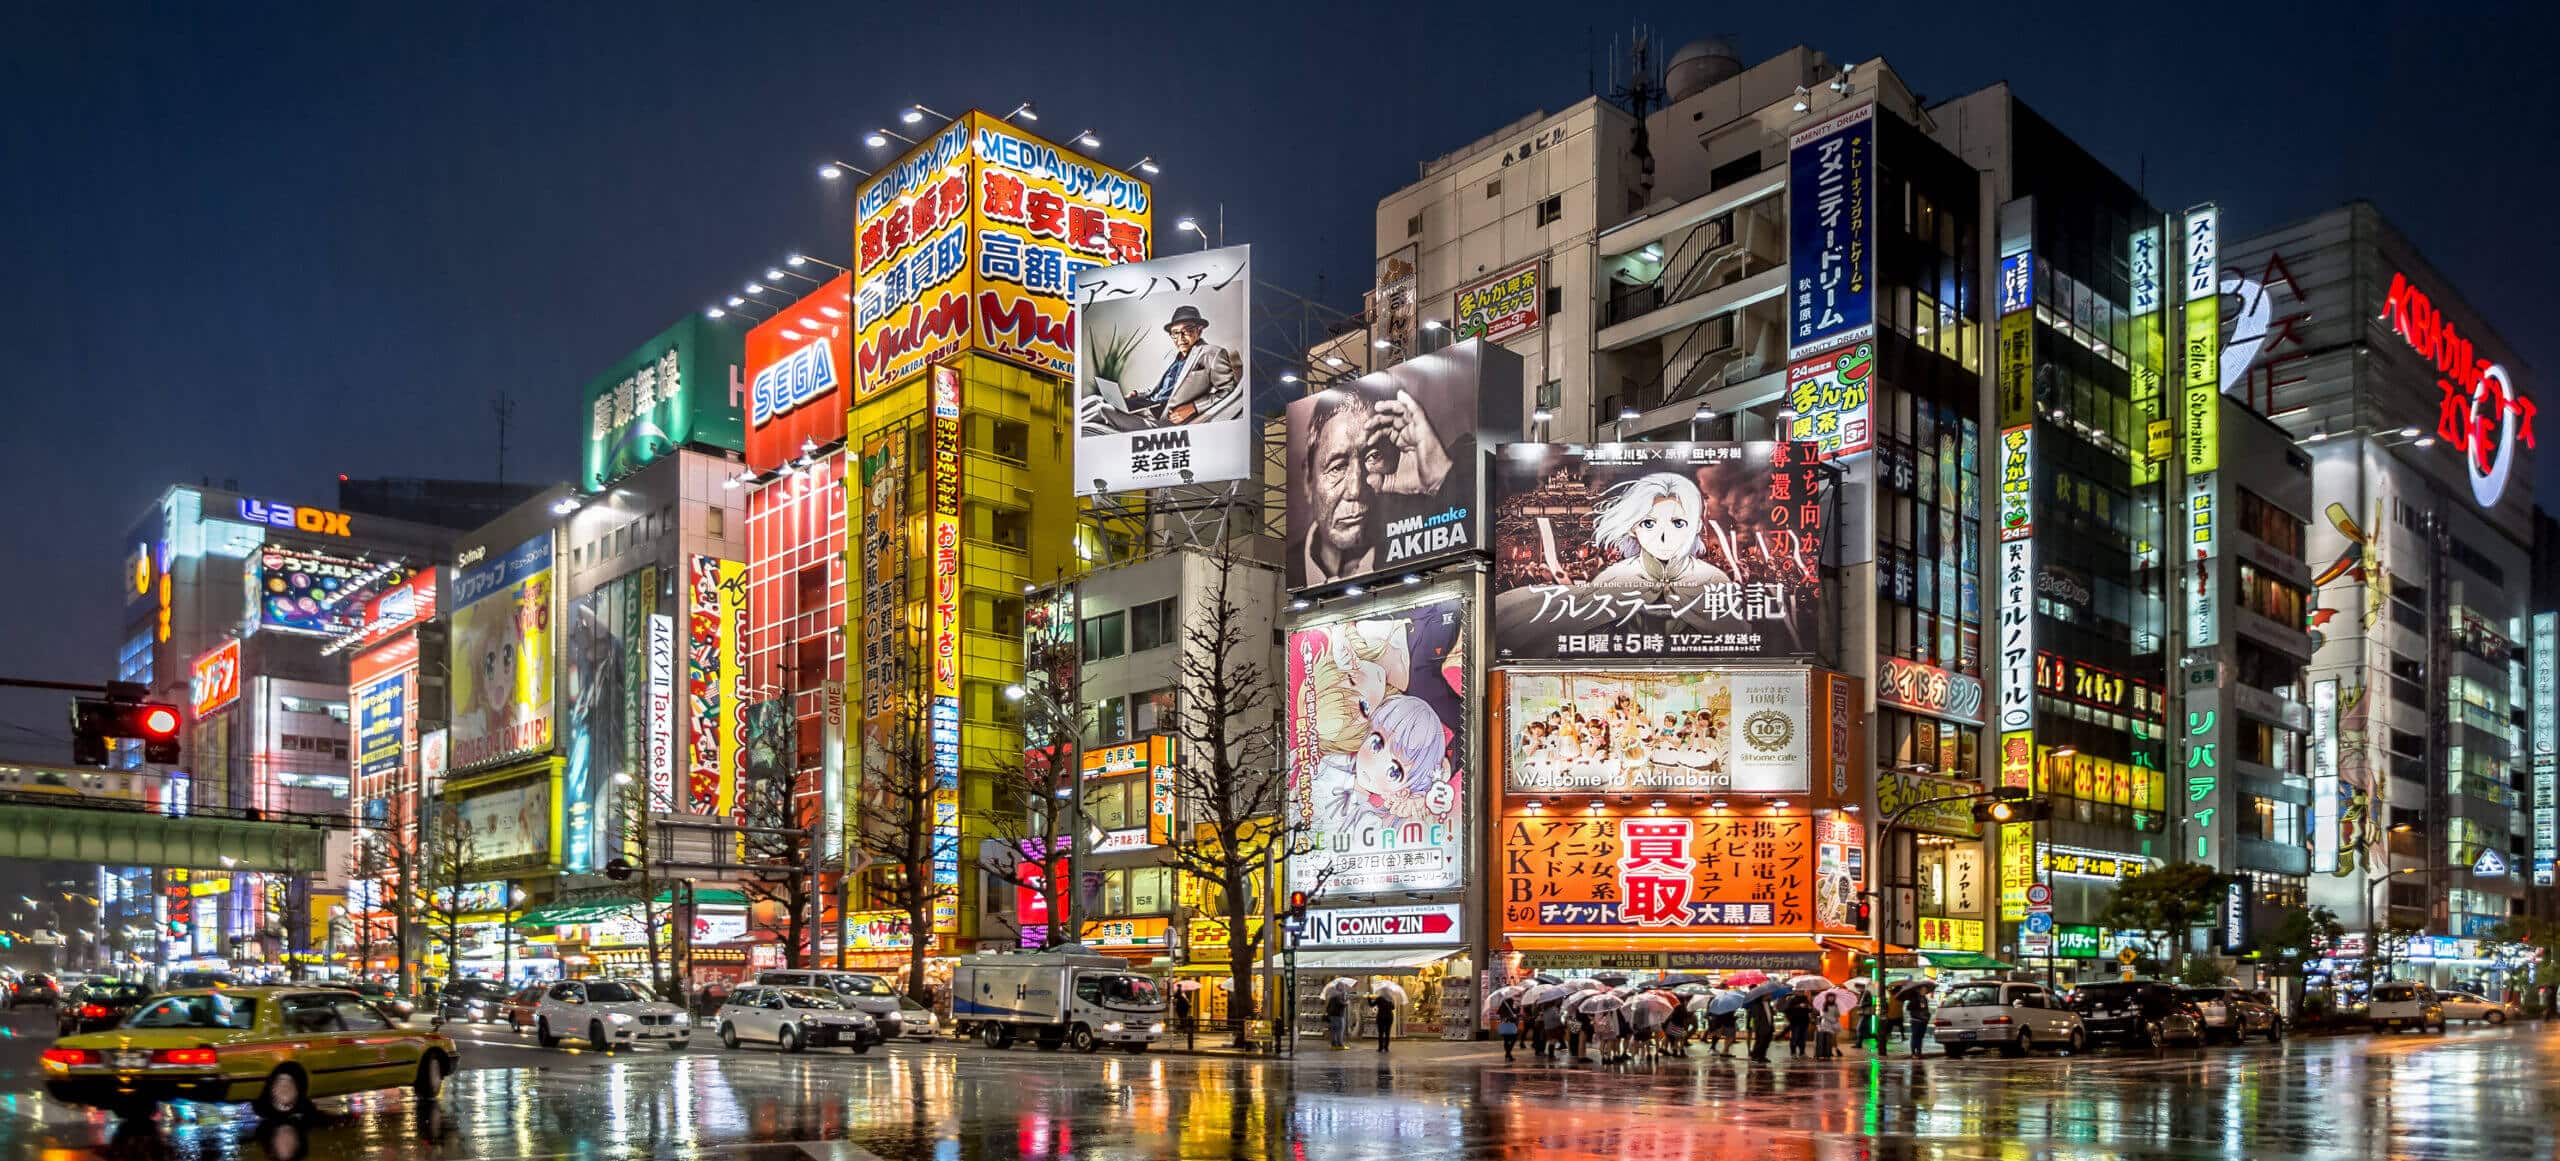 Beyond Baseball: Akihabara, Tokyo's "Electric Town" - JapanBall